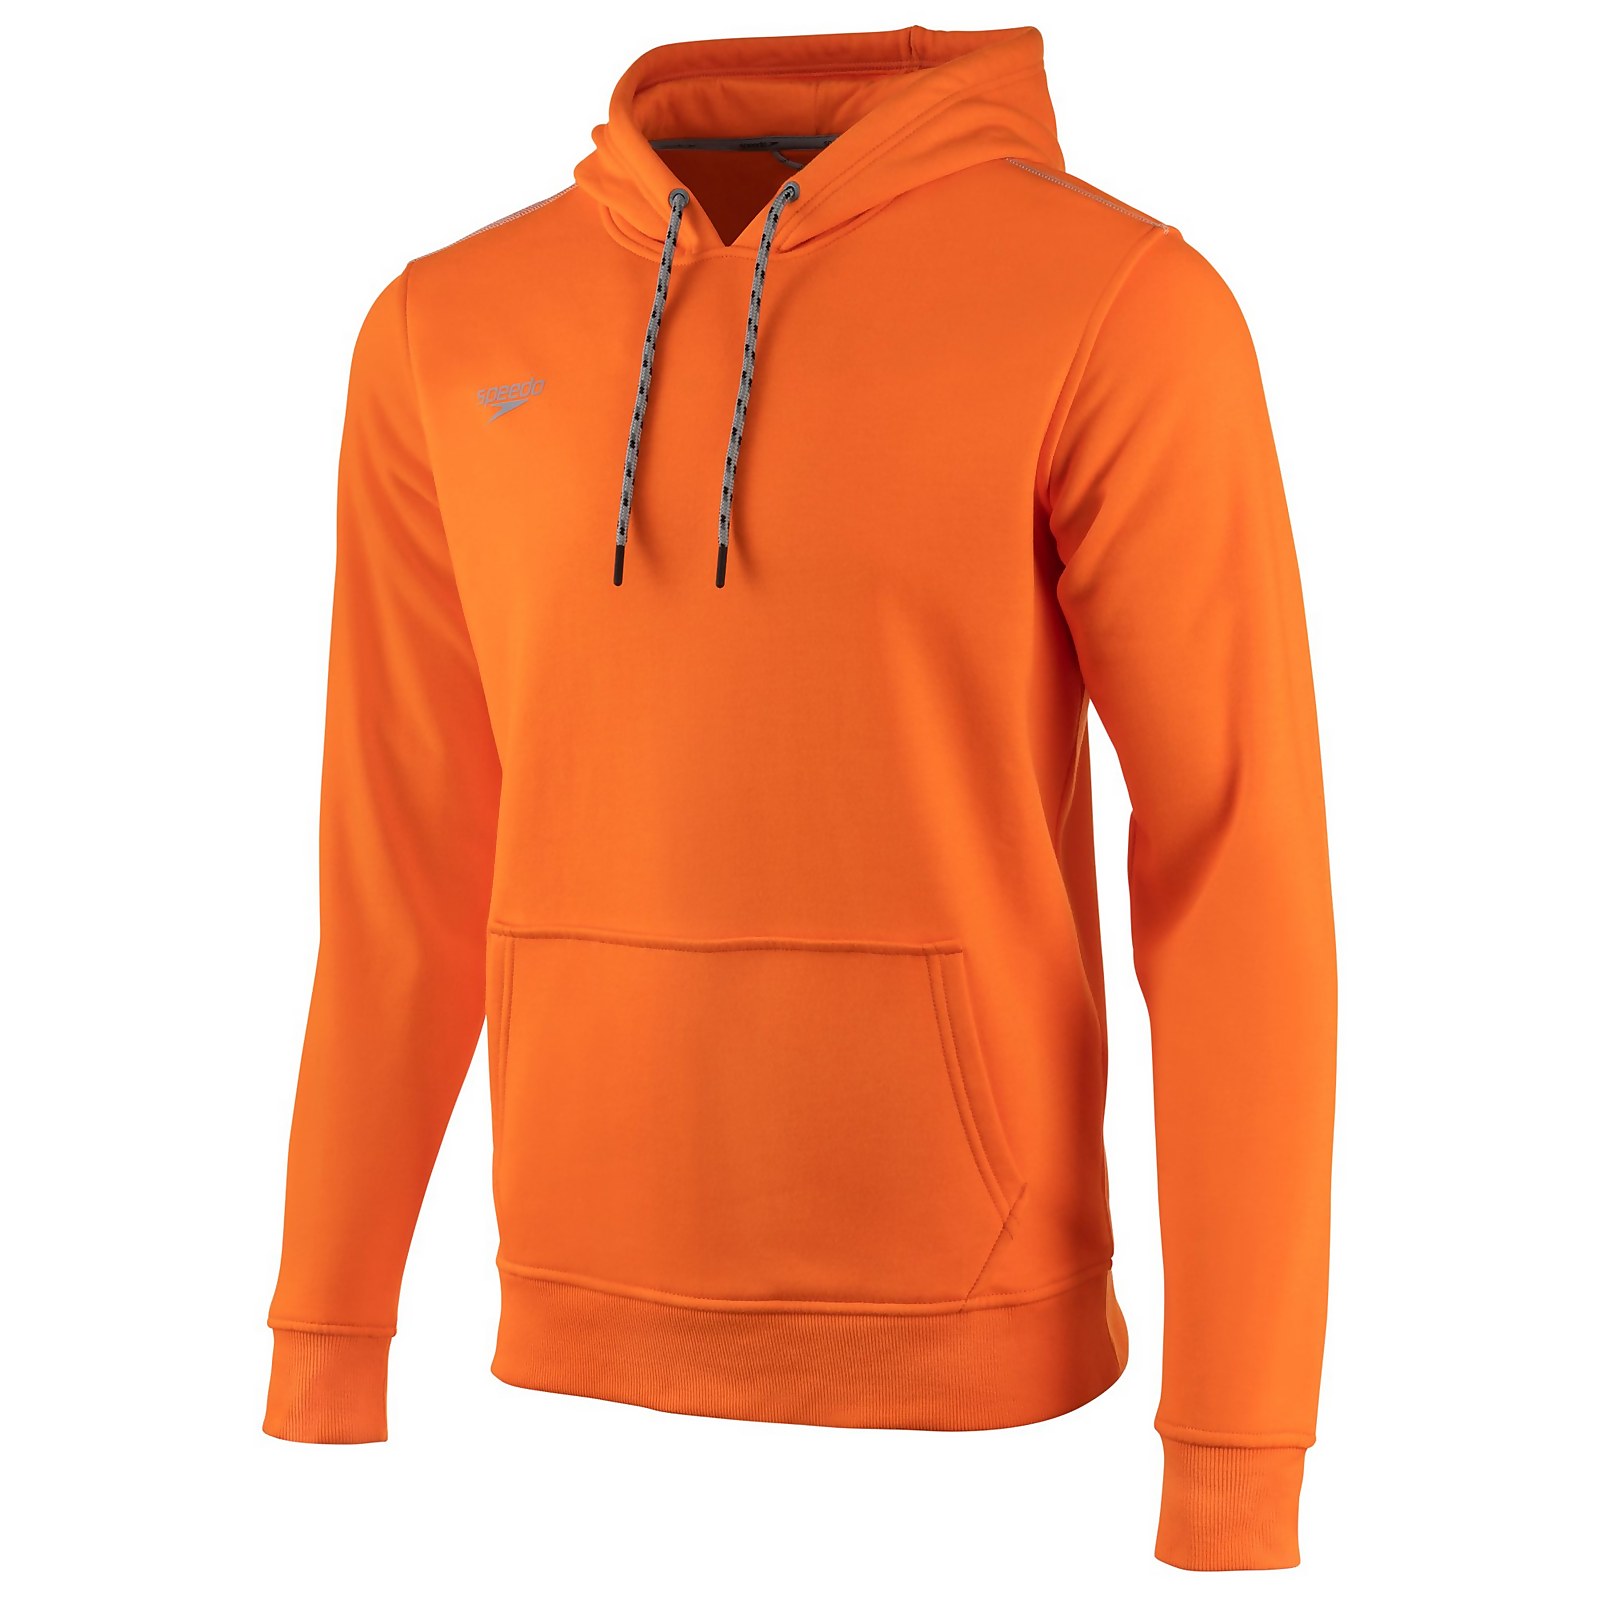 Speedo  Long Sleeve Hooded Sweatshirt - L    : Orange